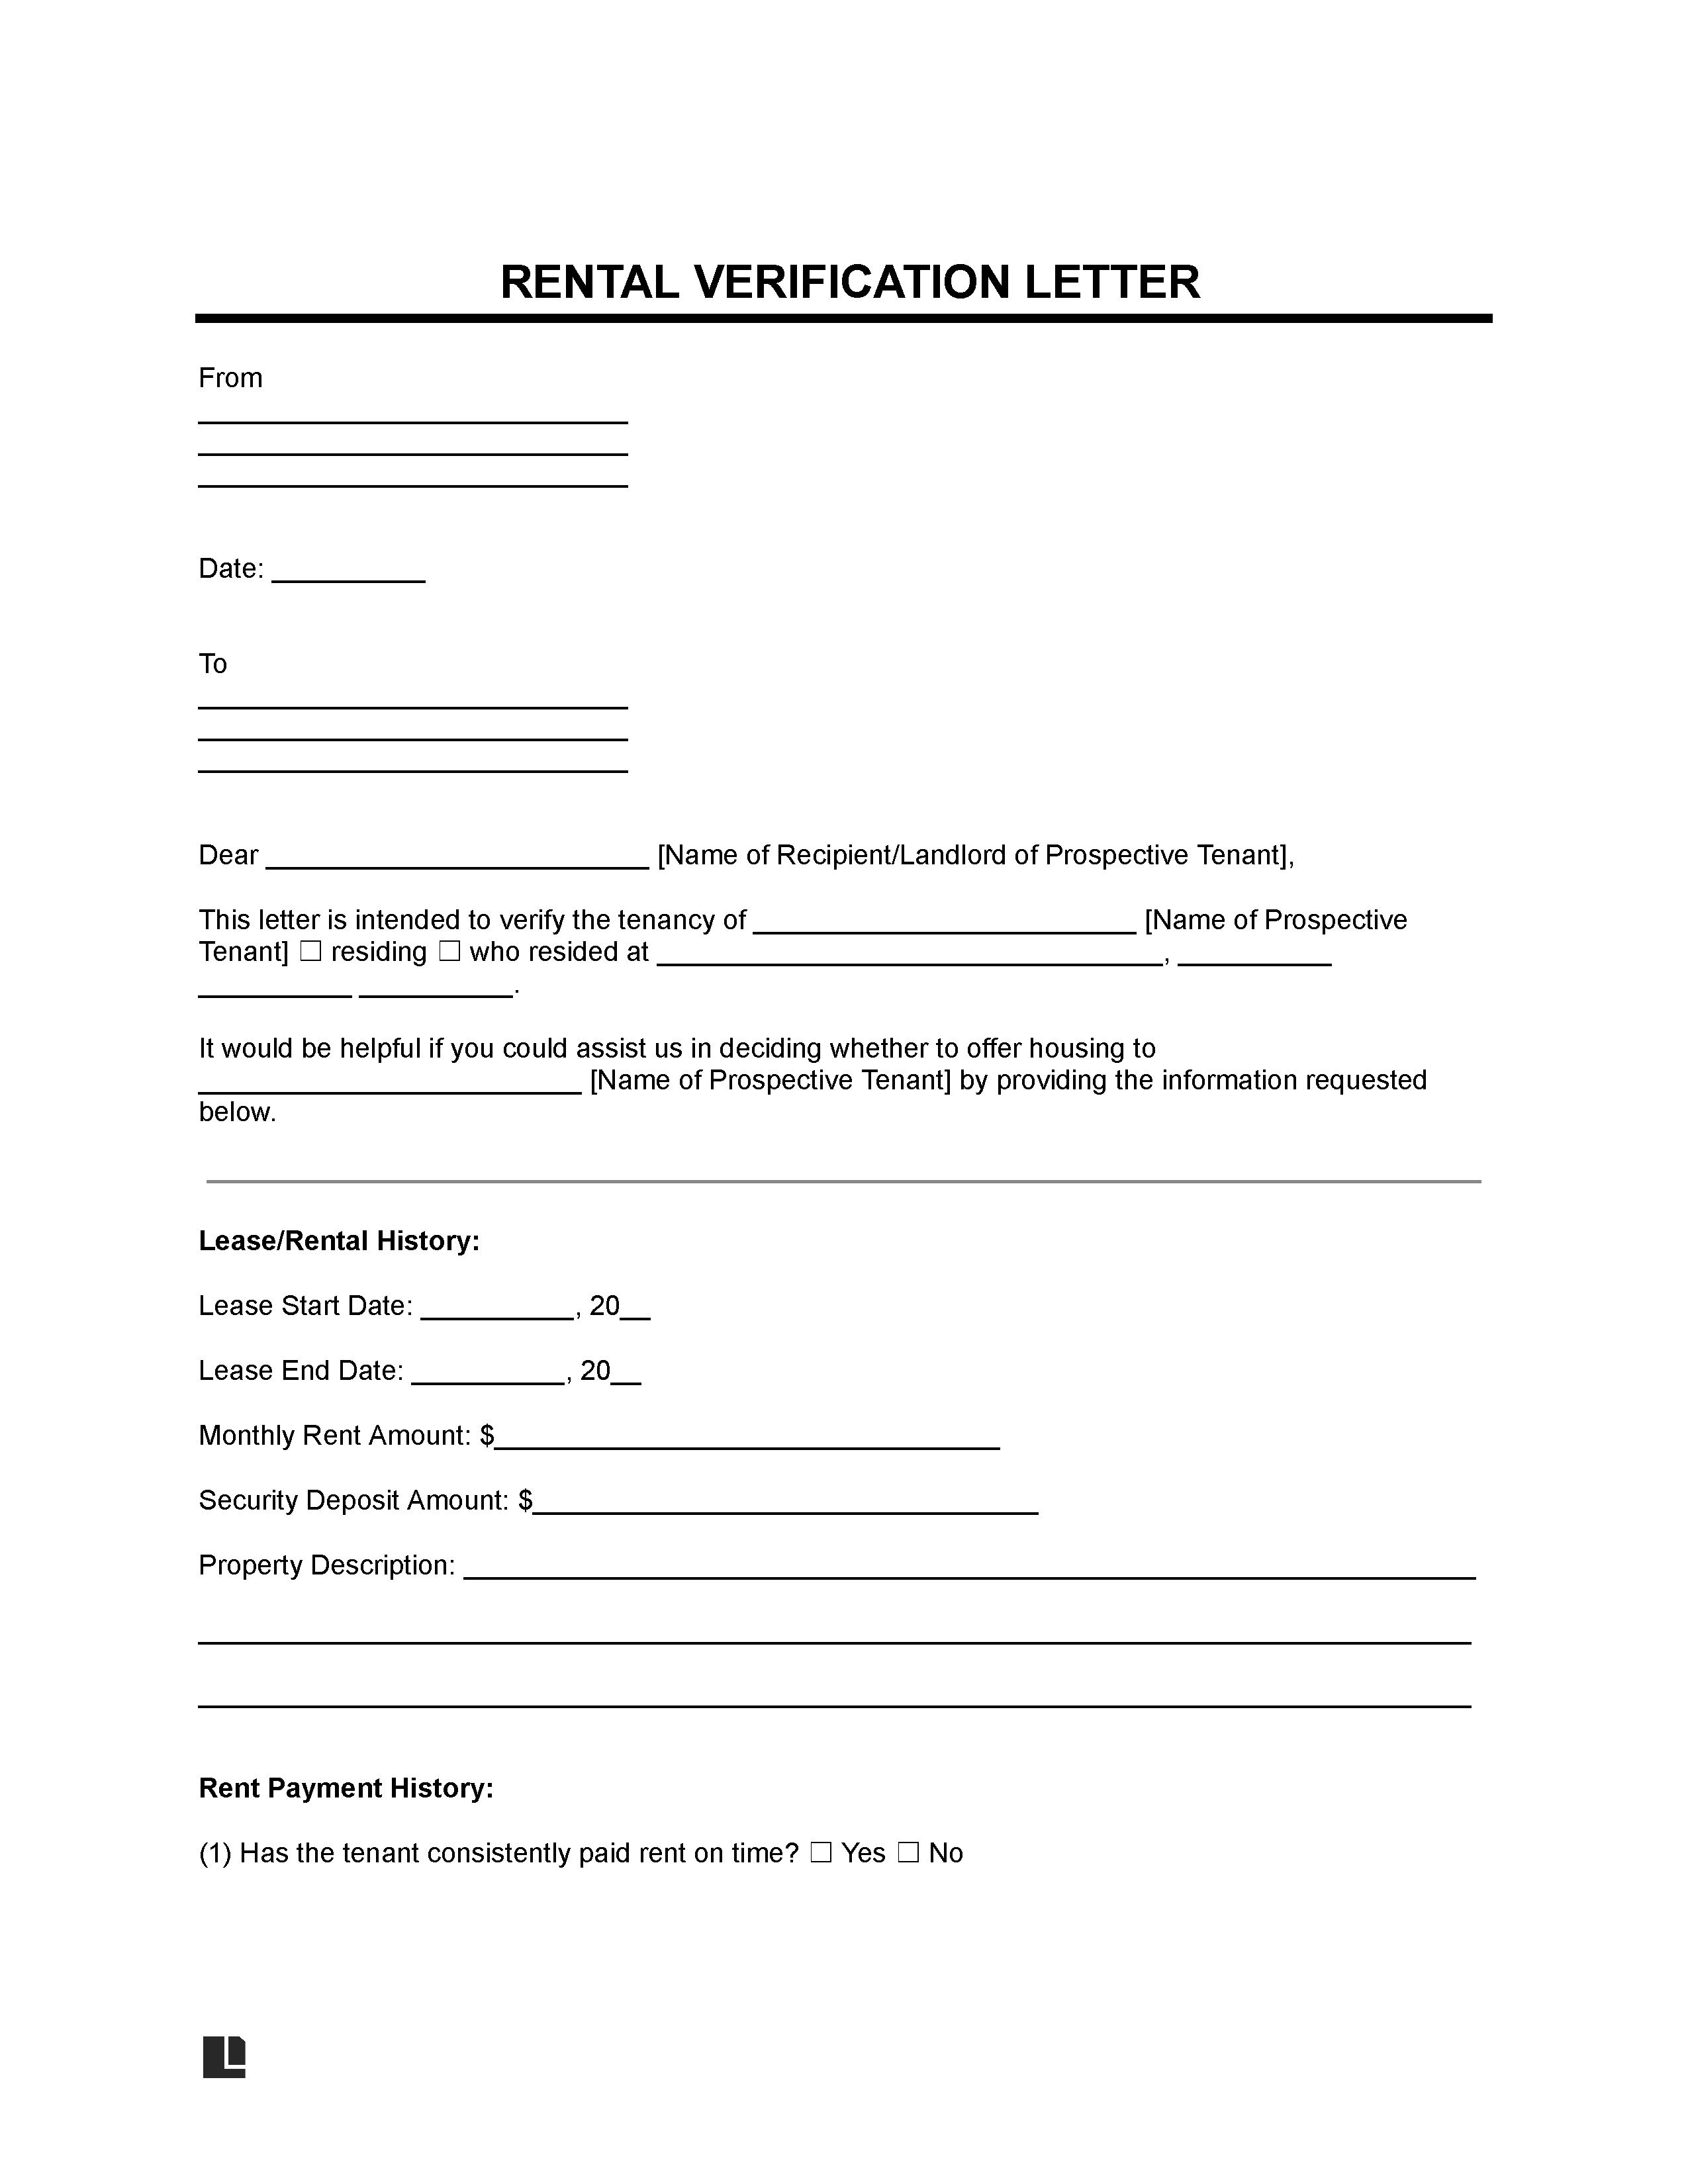 rent (landlord) verification form